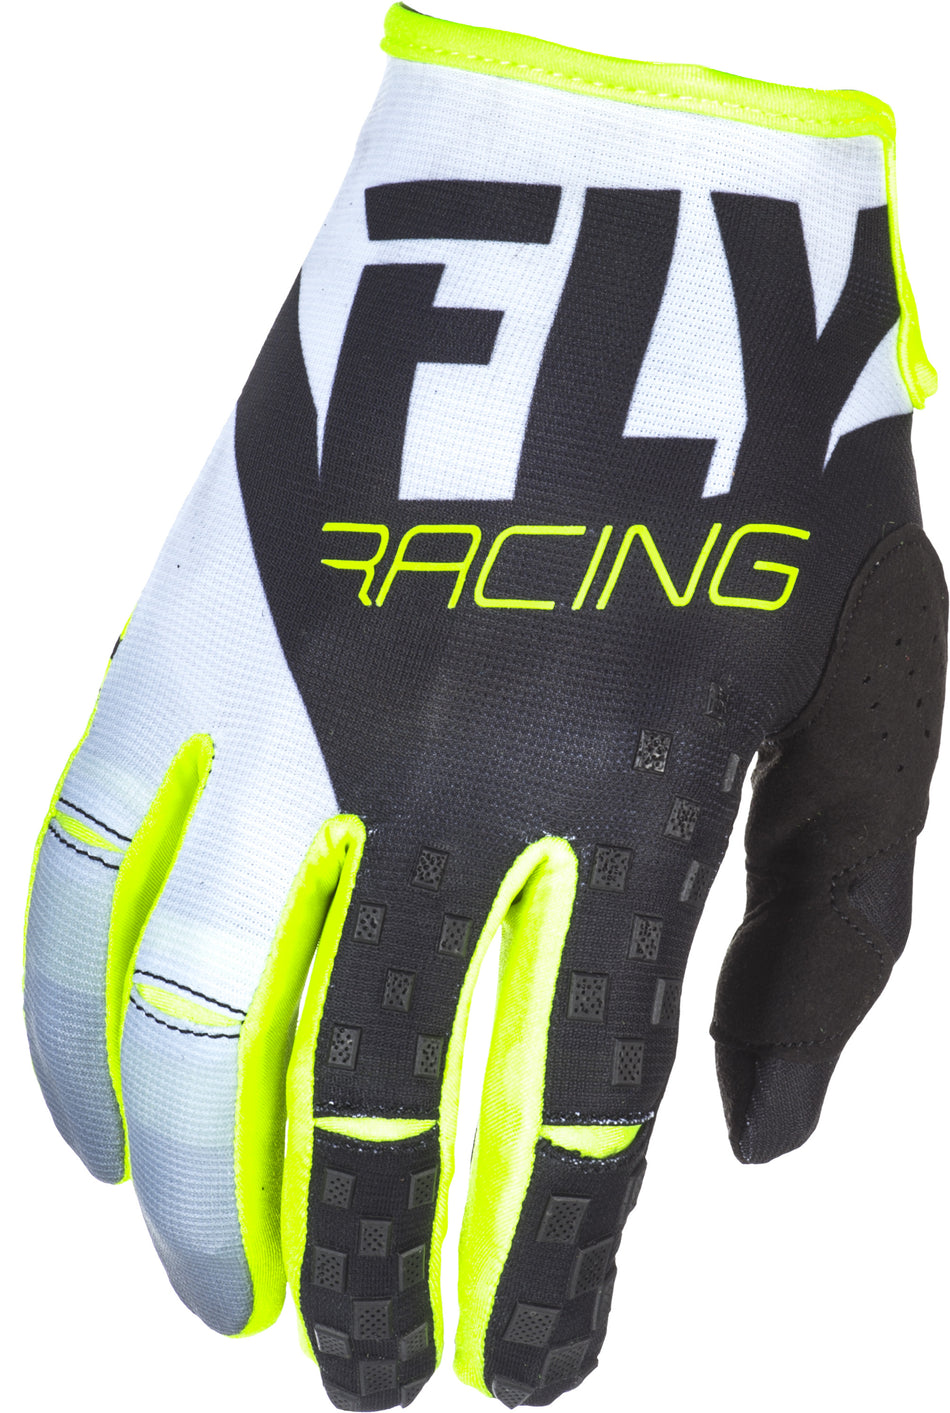 FLY RACING Kinetic Gloves Black/White/Hi-Vis Sz 4 371-41604